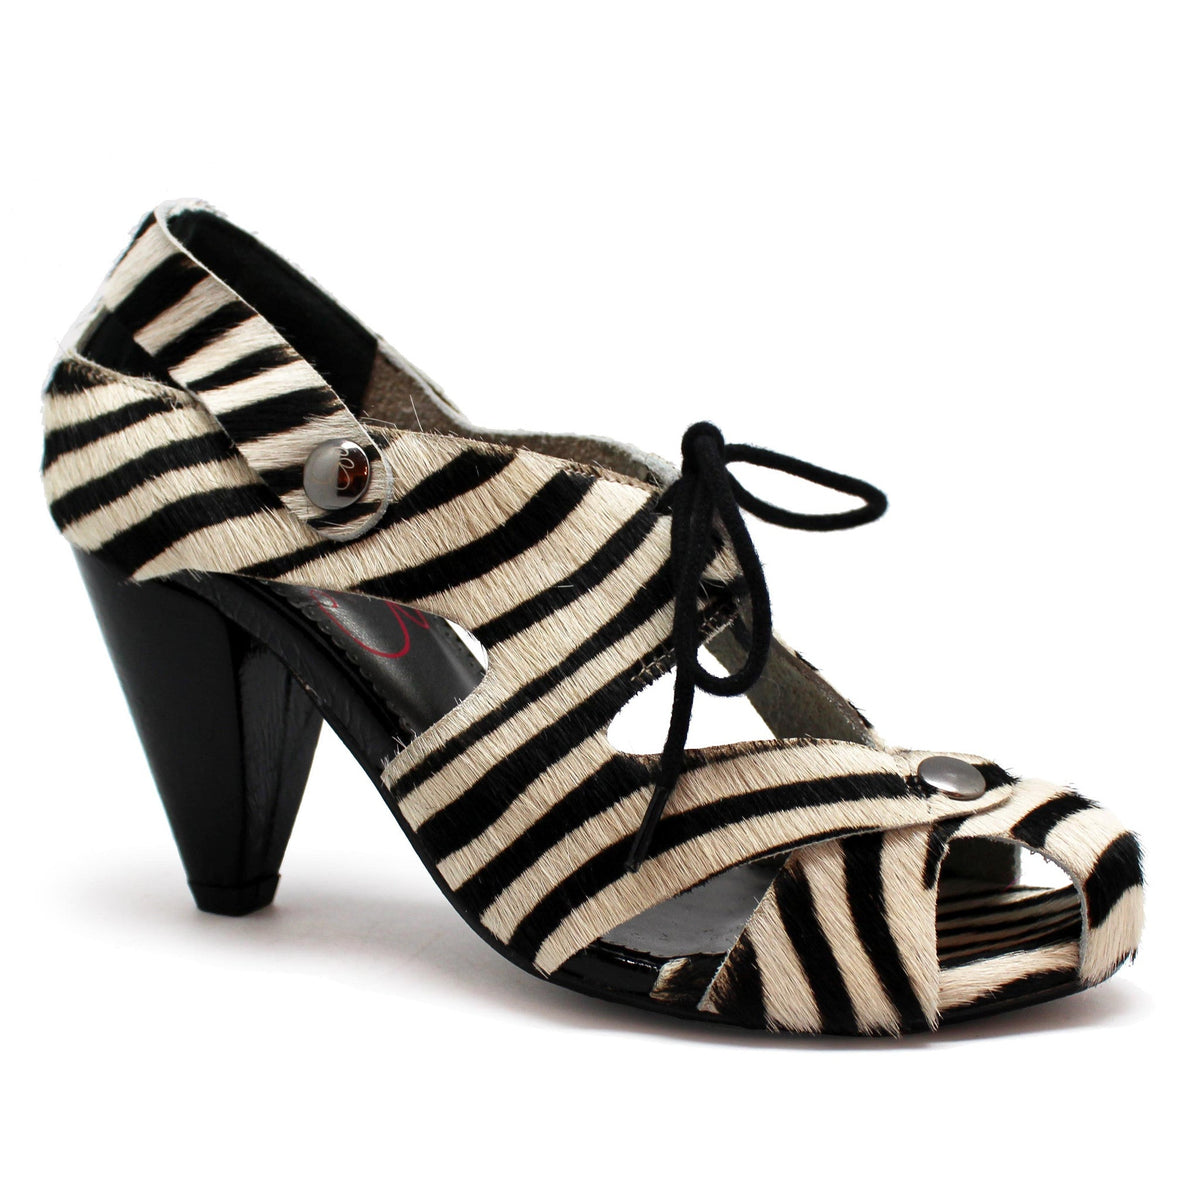 Coco - Zebra black and white sandal - British D'sire